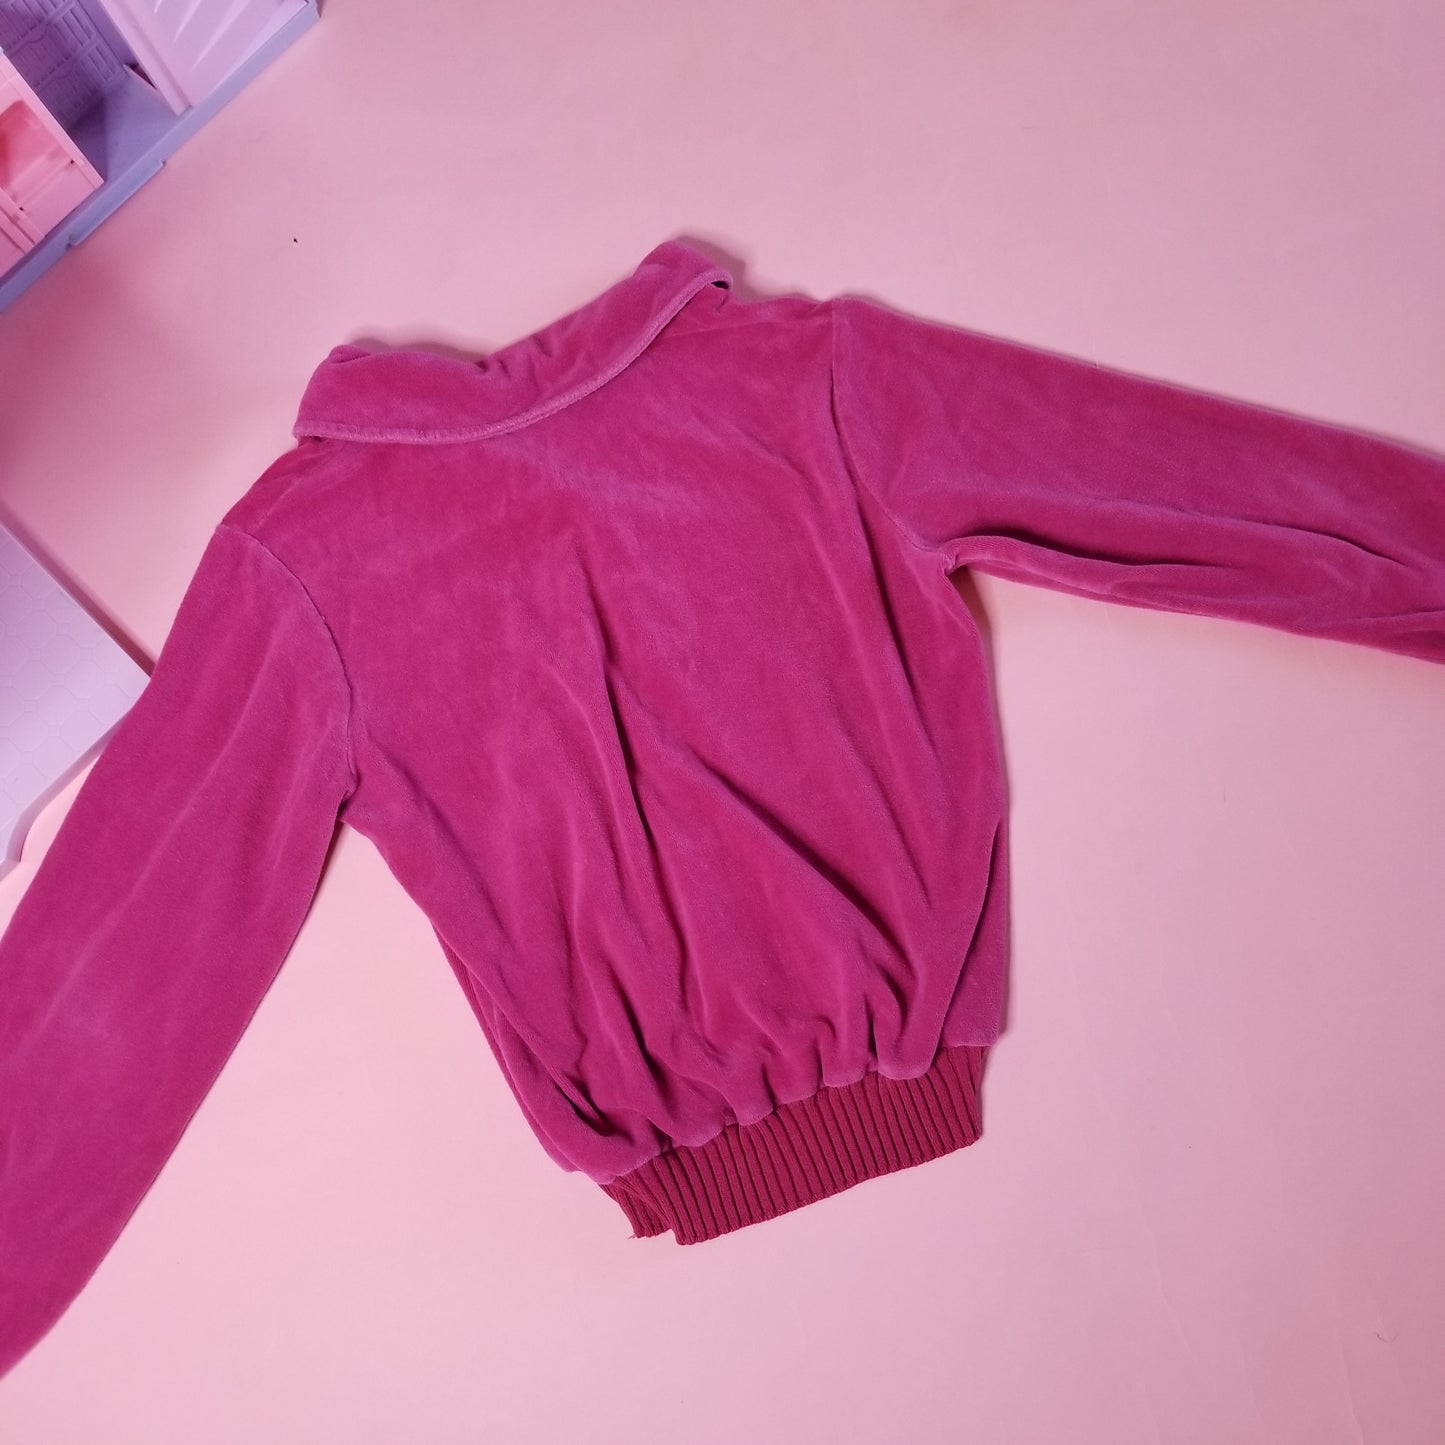 Hot pink terry cloth collared sweatshirt